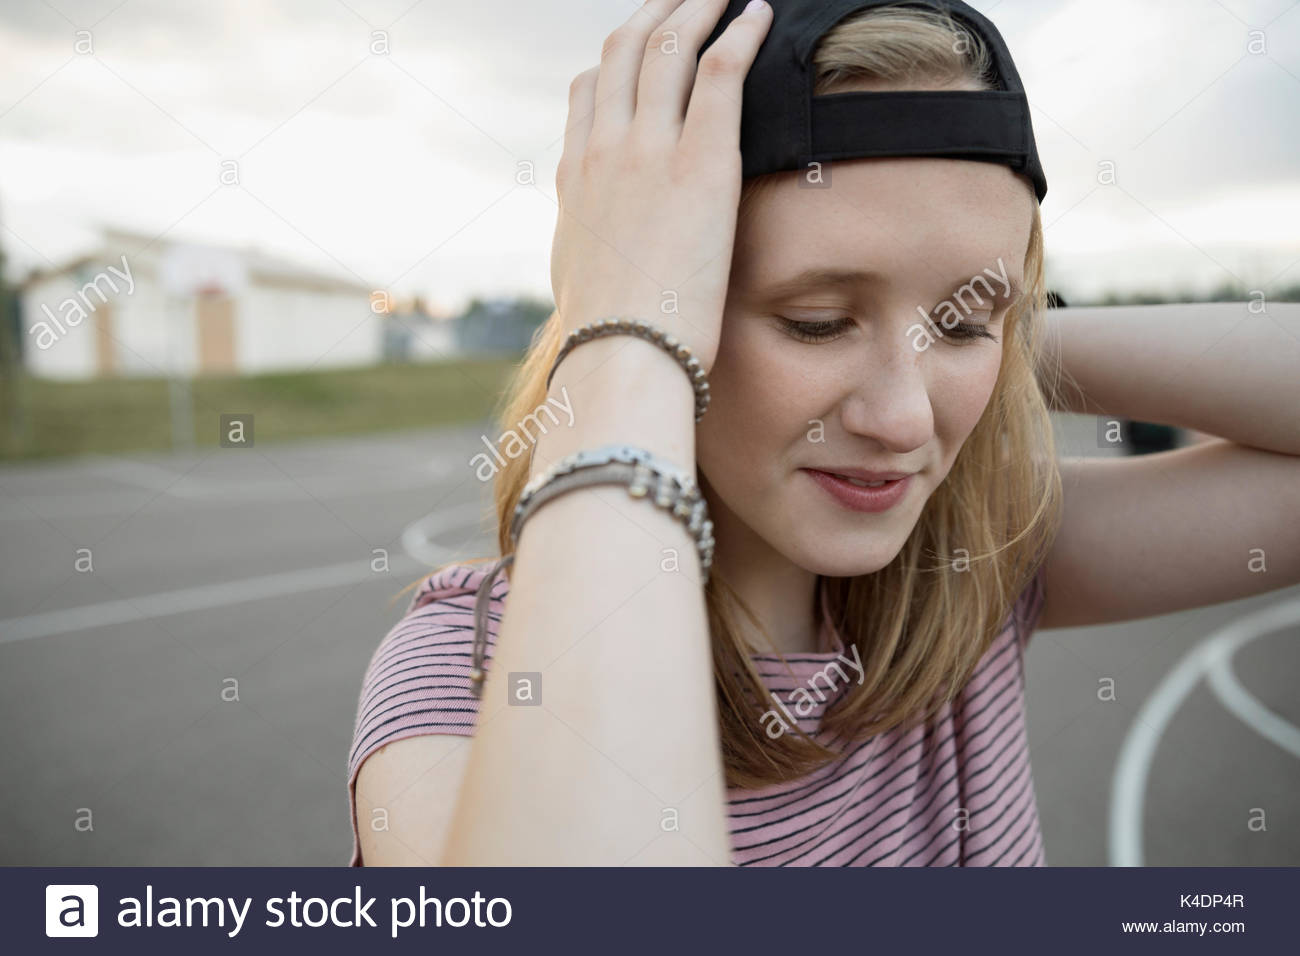 Teenage girl wearing backward baseball cap on outdoor basketball court Stock Photo